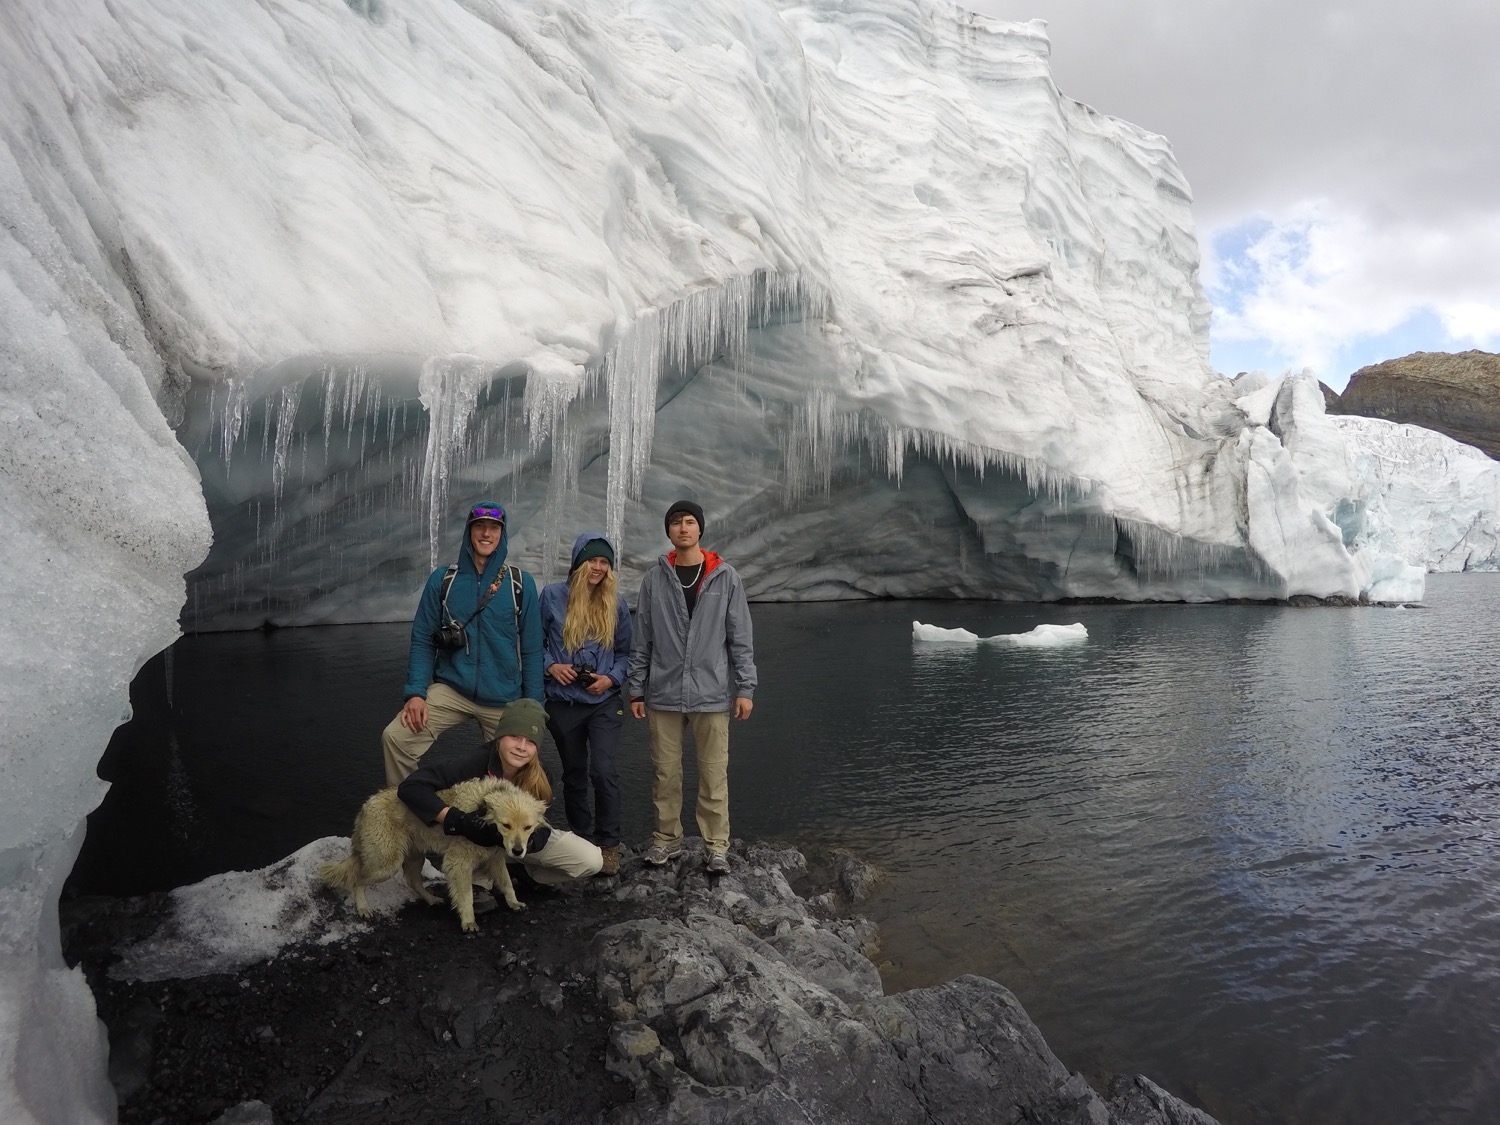 Exploring the Pastoruri Glacier